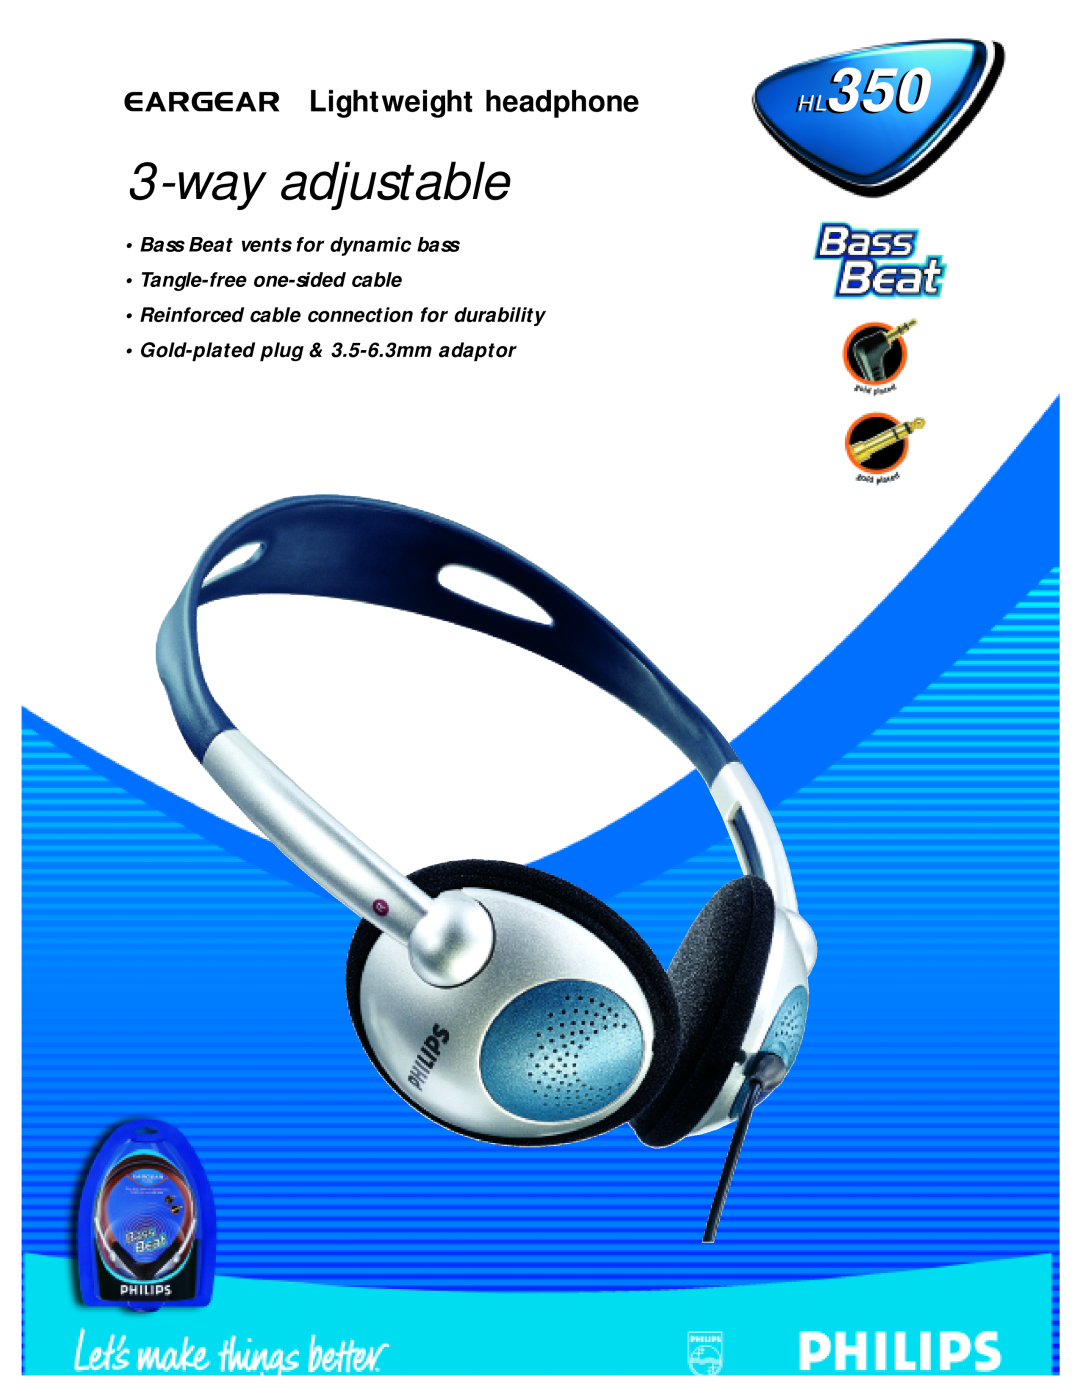 Philips HL350 manual wayadjustable, EARGEAR Lightweight headphone, Bass Beat vents for dynamic bass 